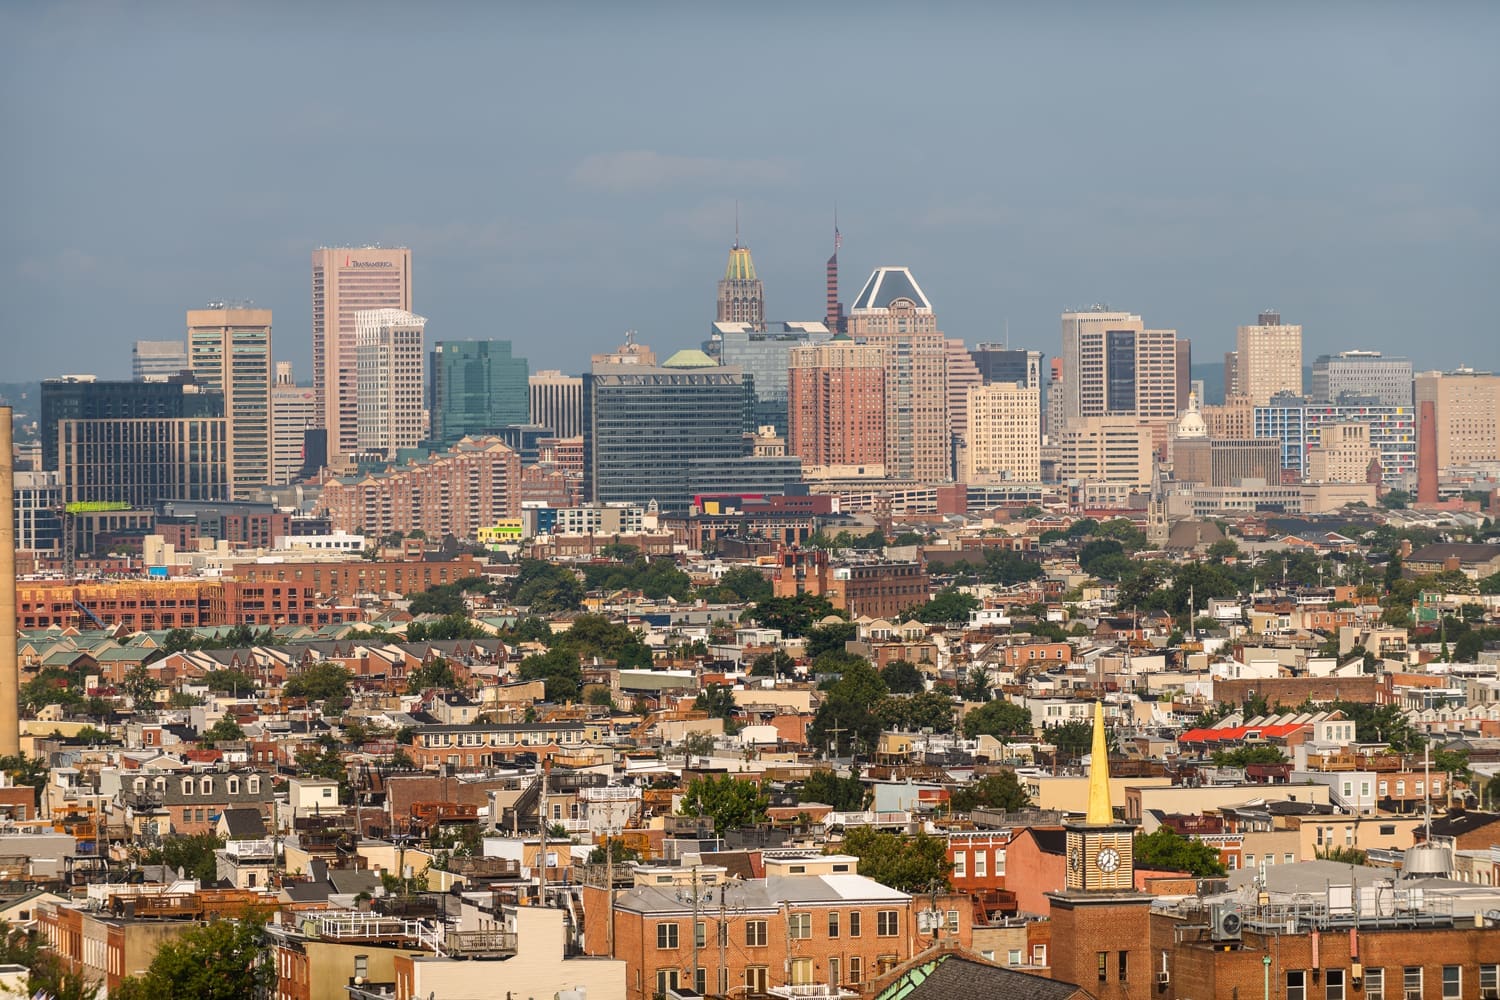 Skyline of Baltimore, the community where CCA serves.